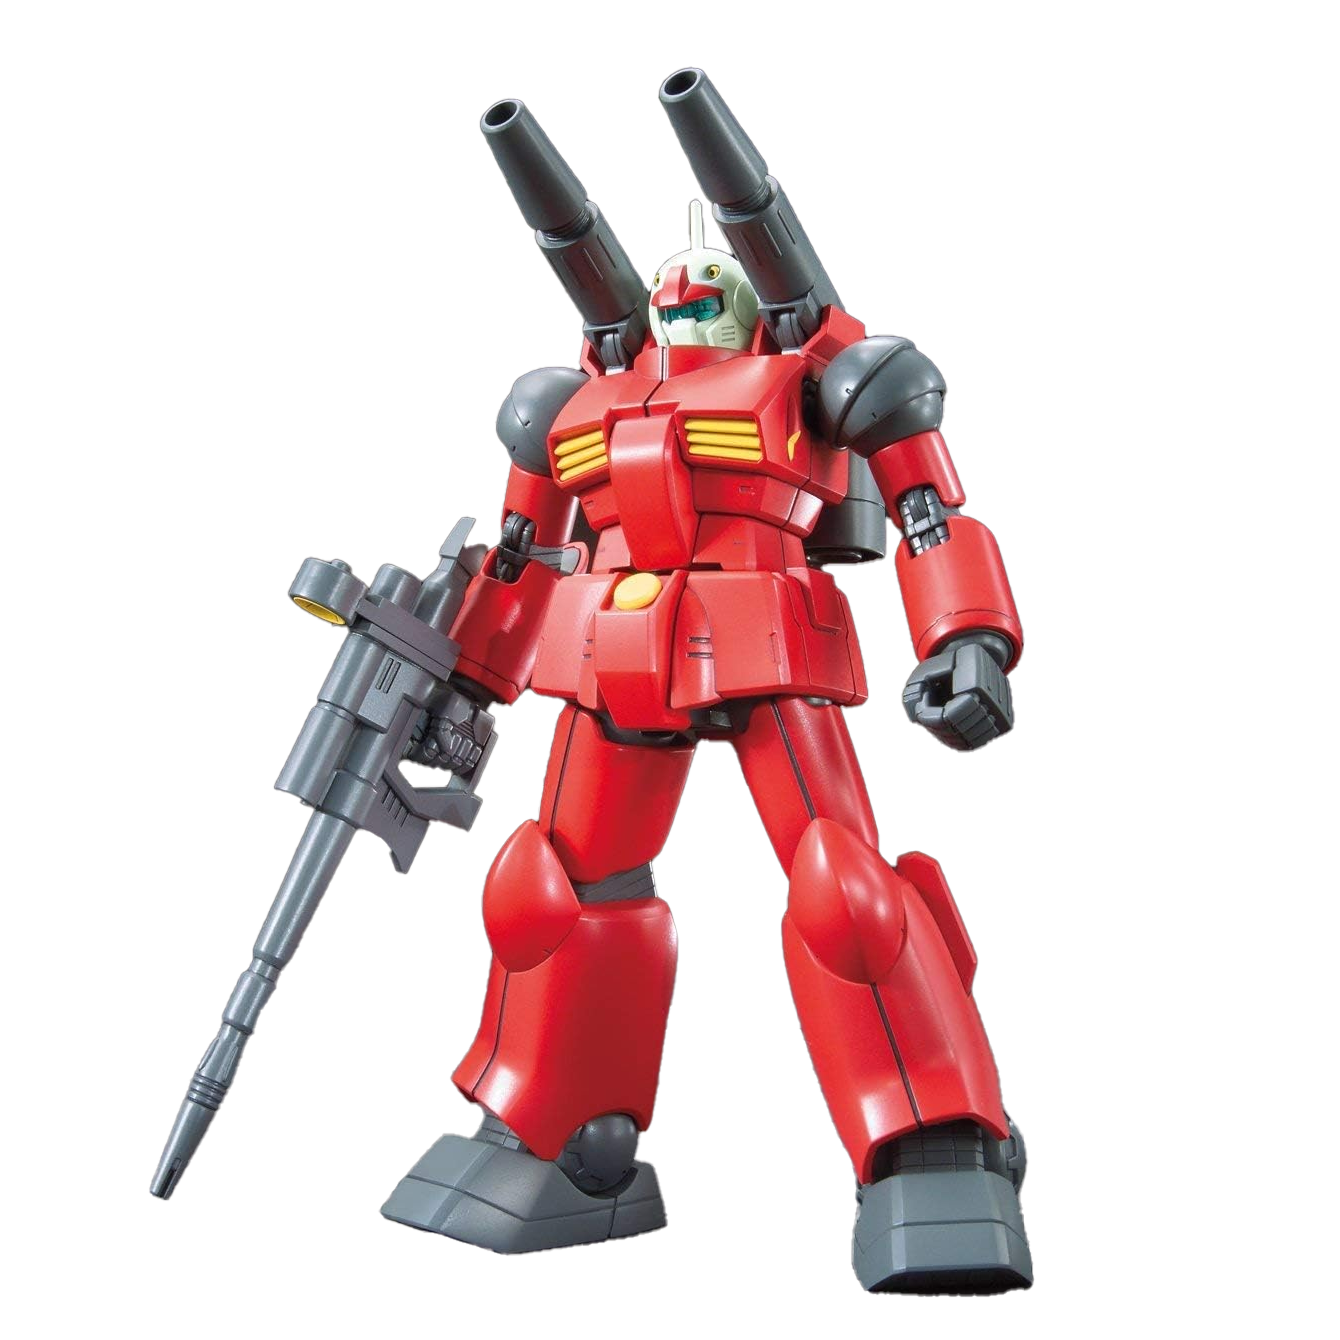 Bandai Hobby - HGUC - 1/144 HGUC RX-77-2 Guncannon